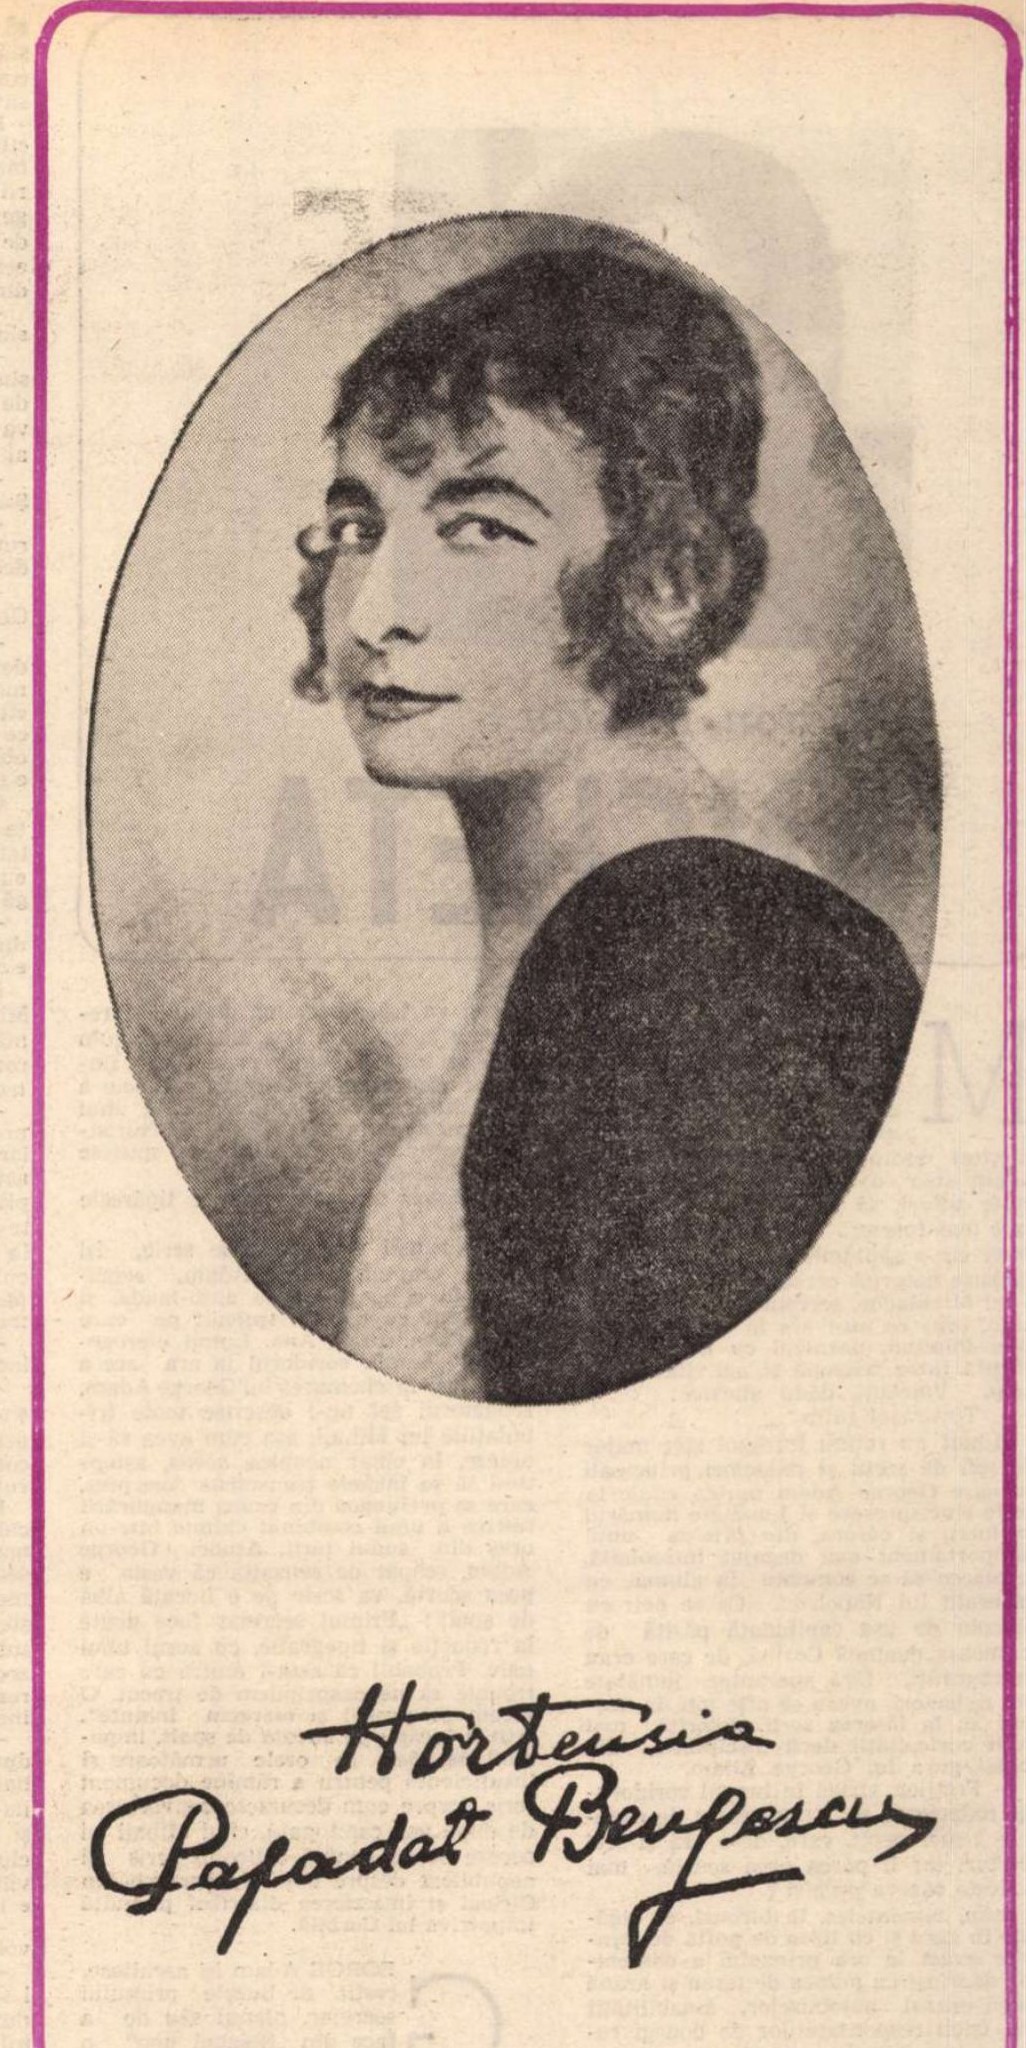 Hortensia Papadat Bengescu